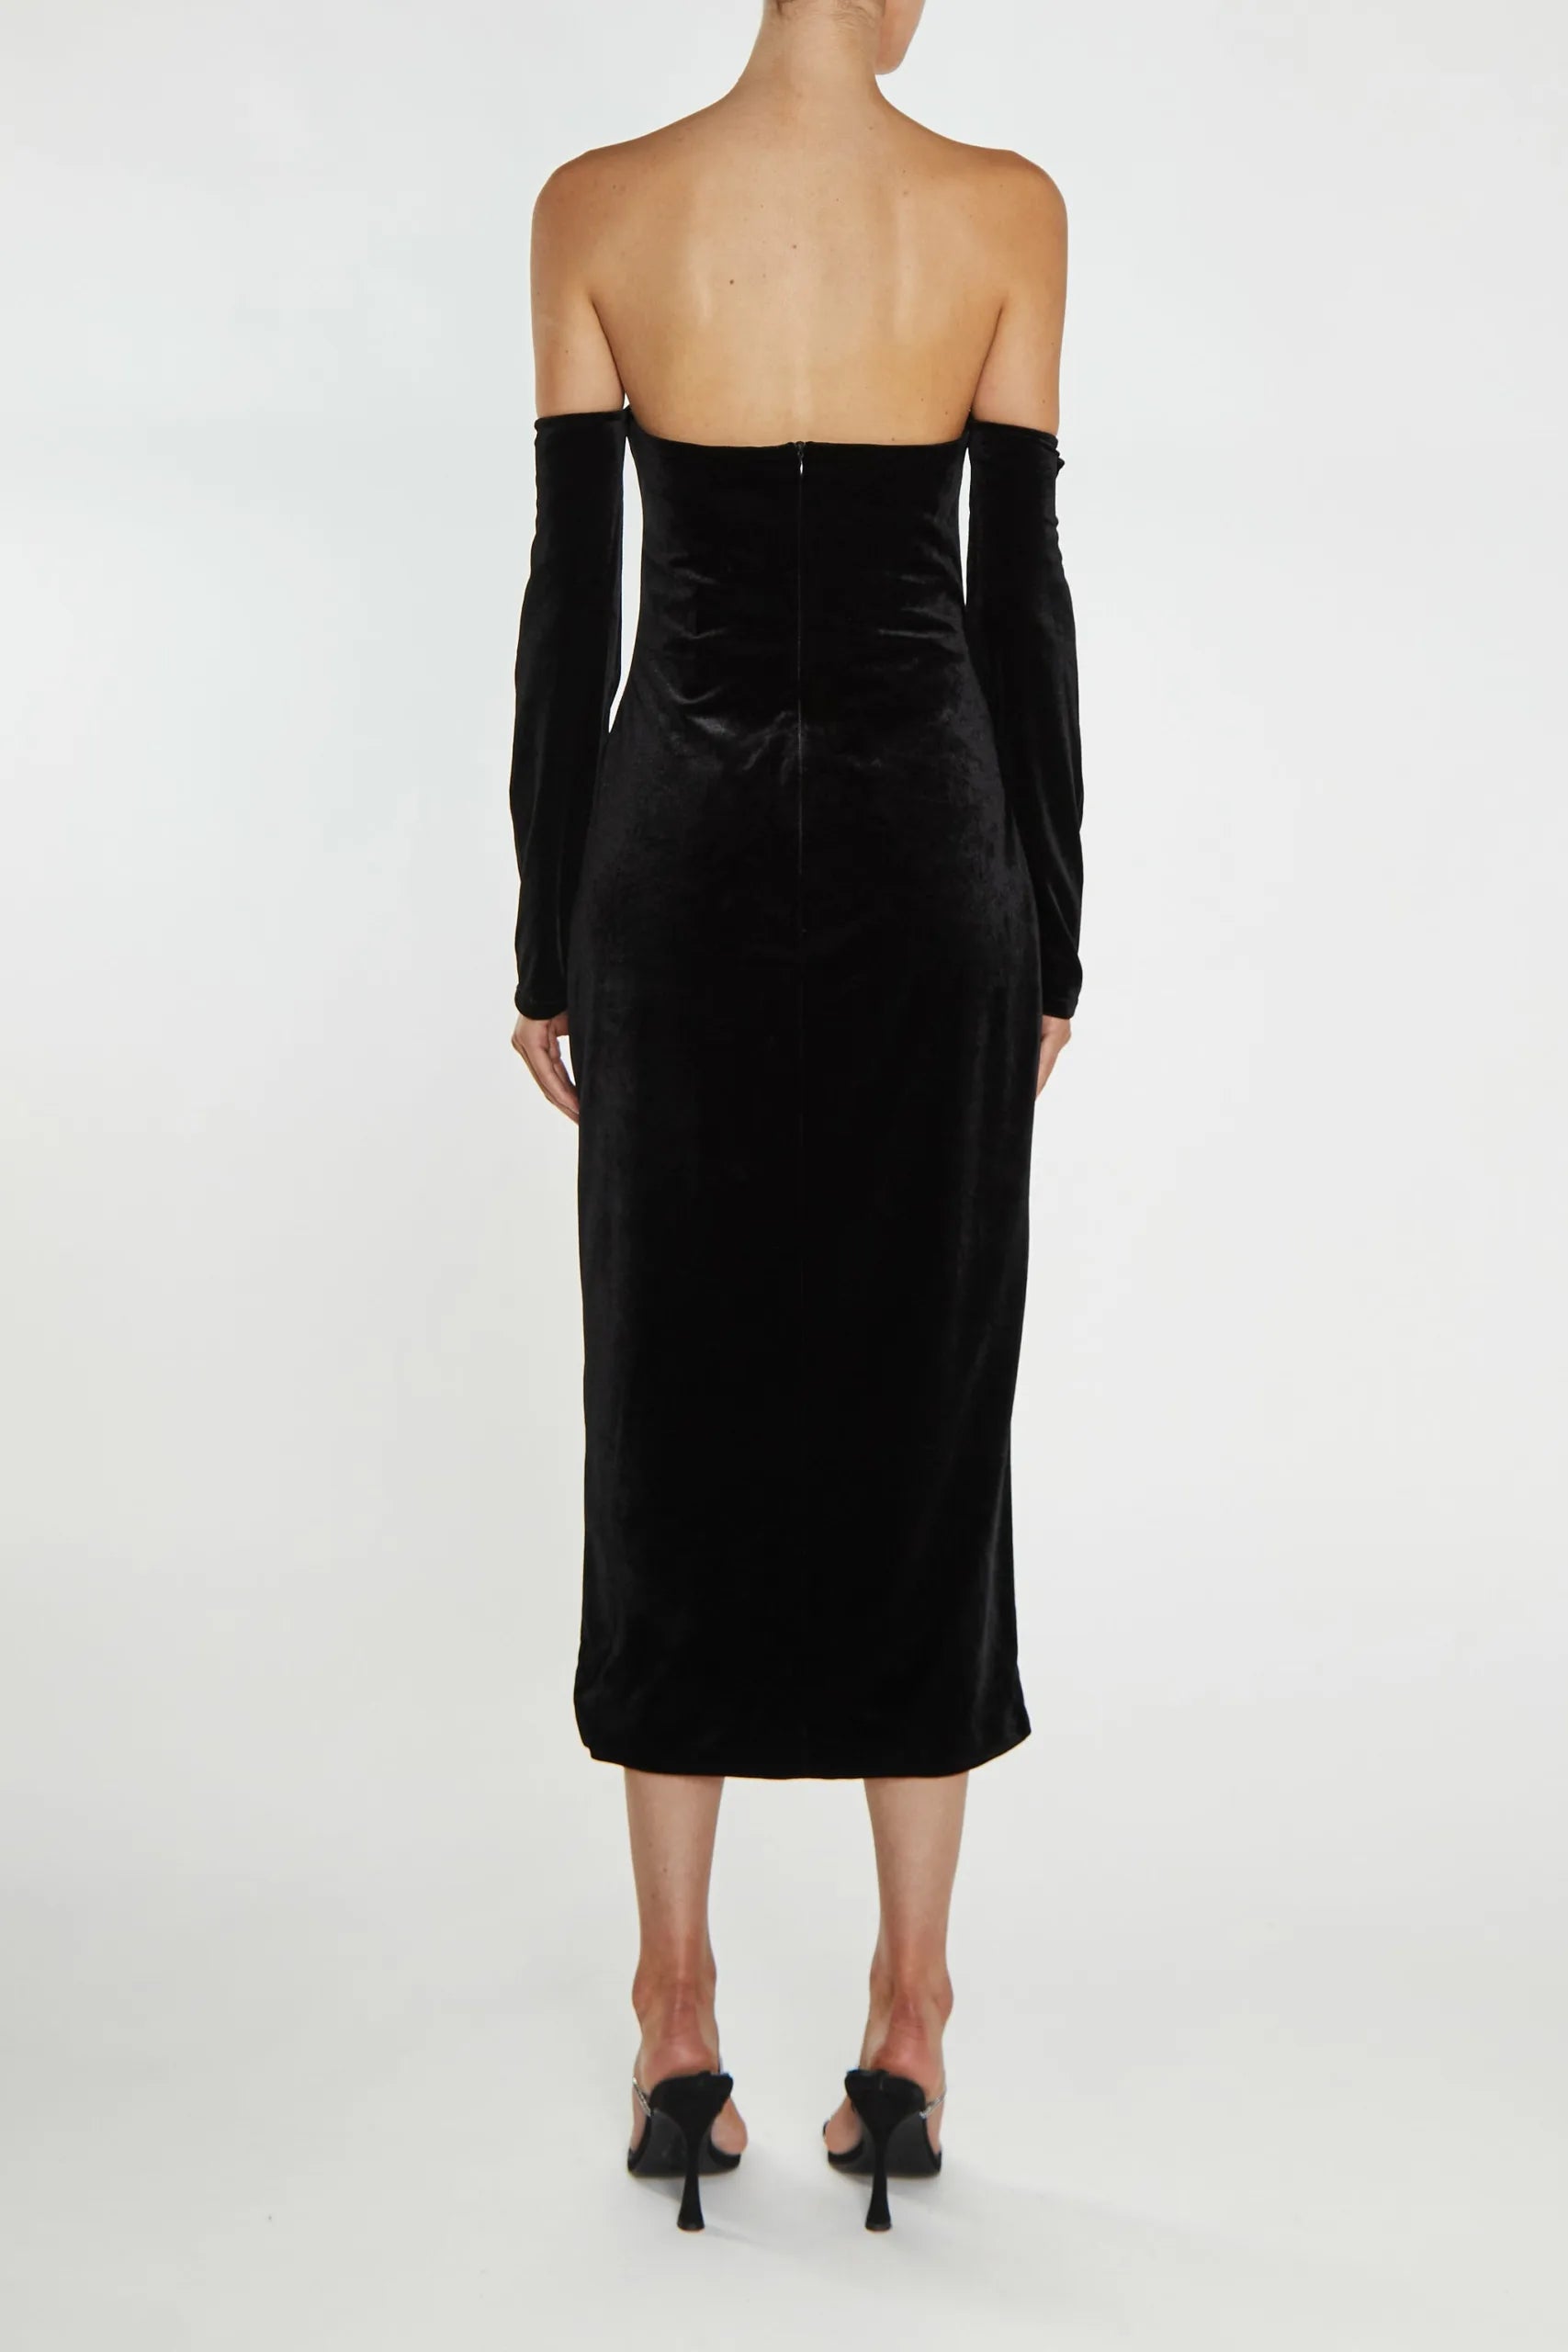 True Decadence Zoe Black Bardot Fitted Midi Dress